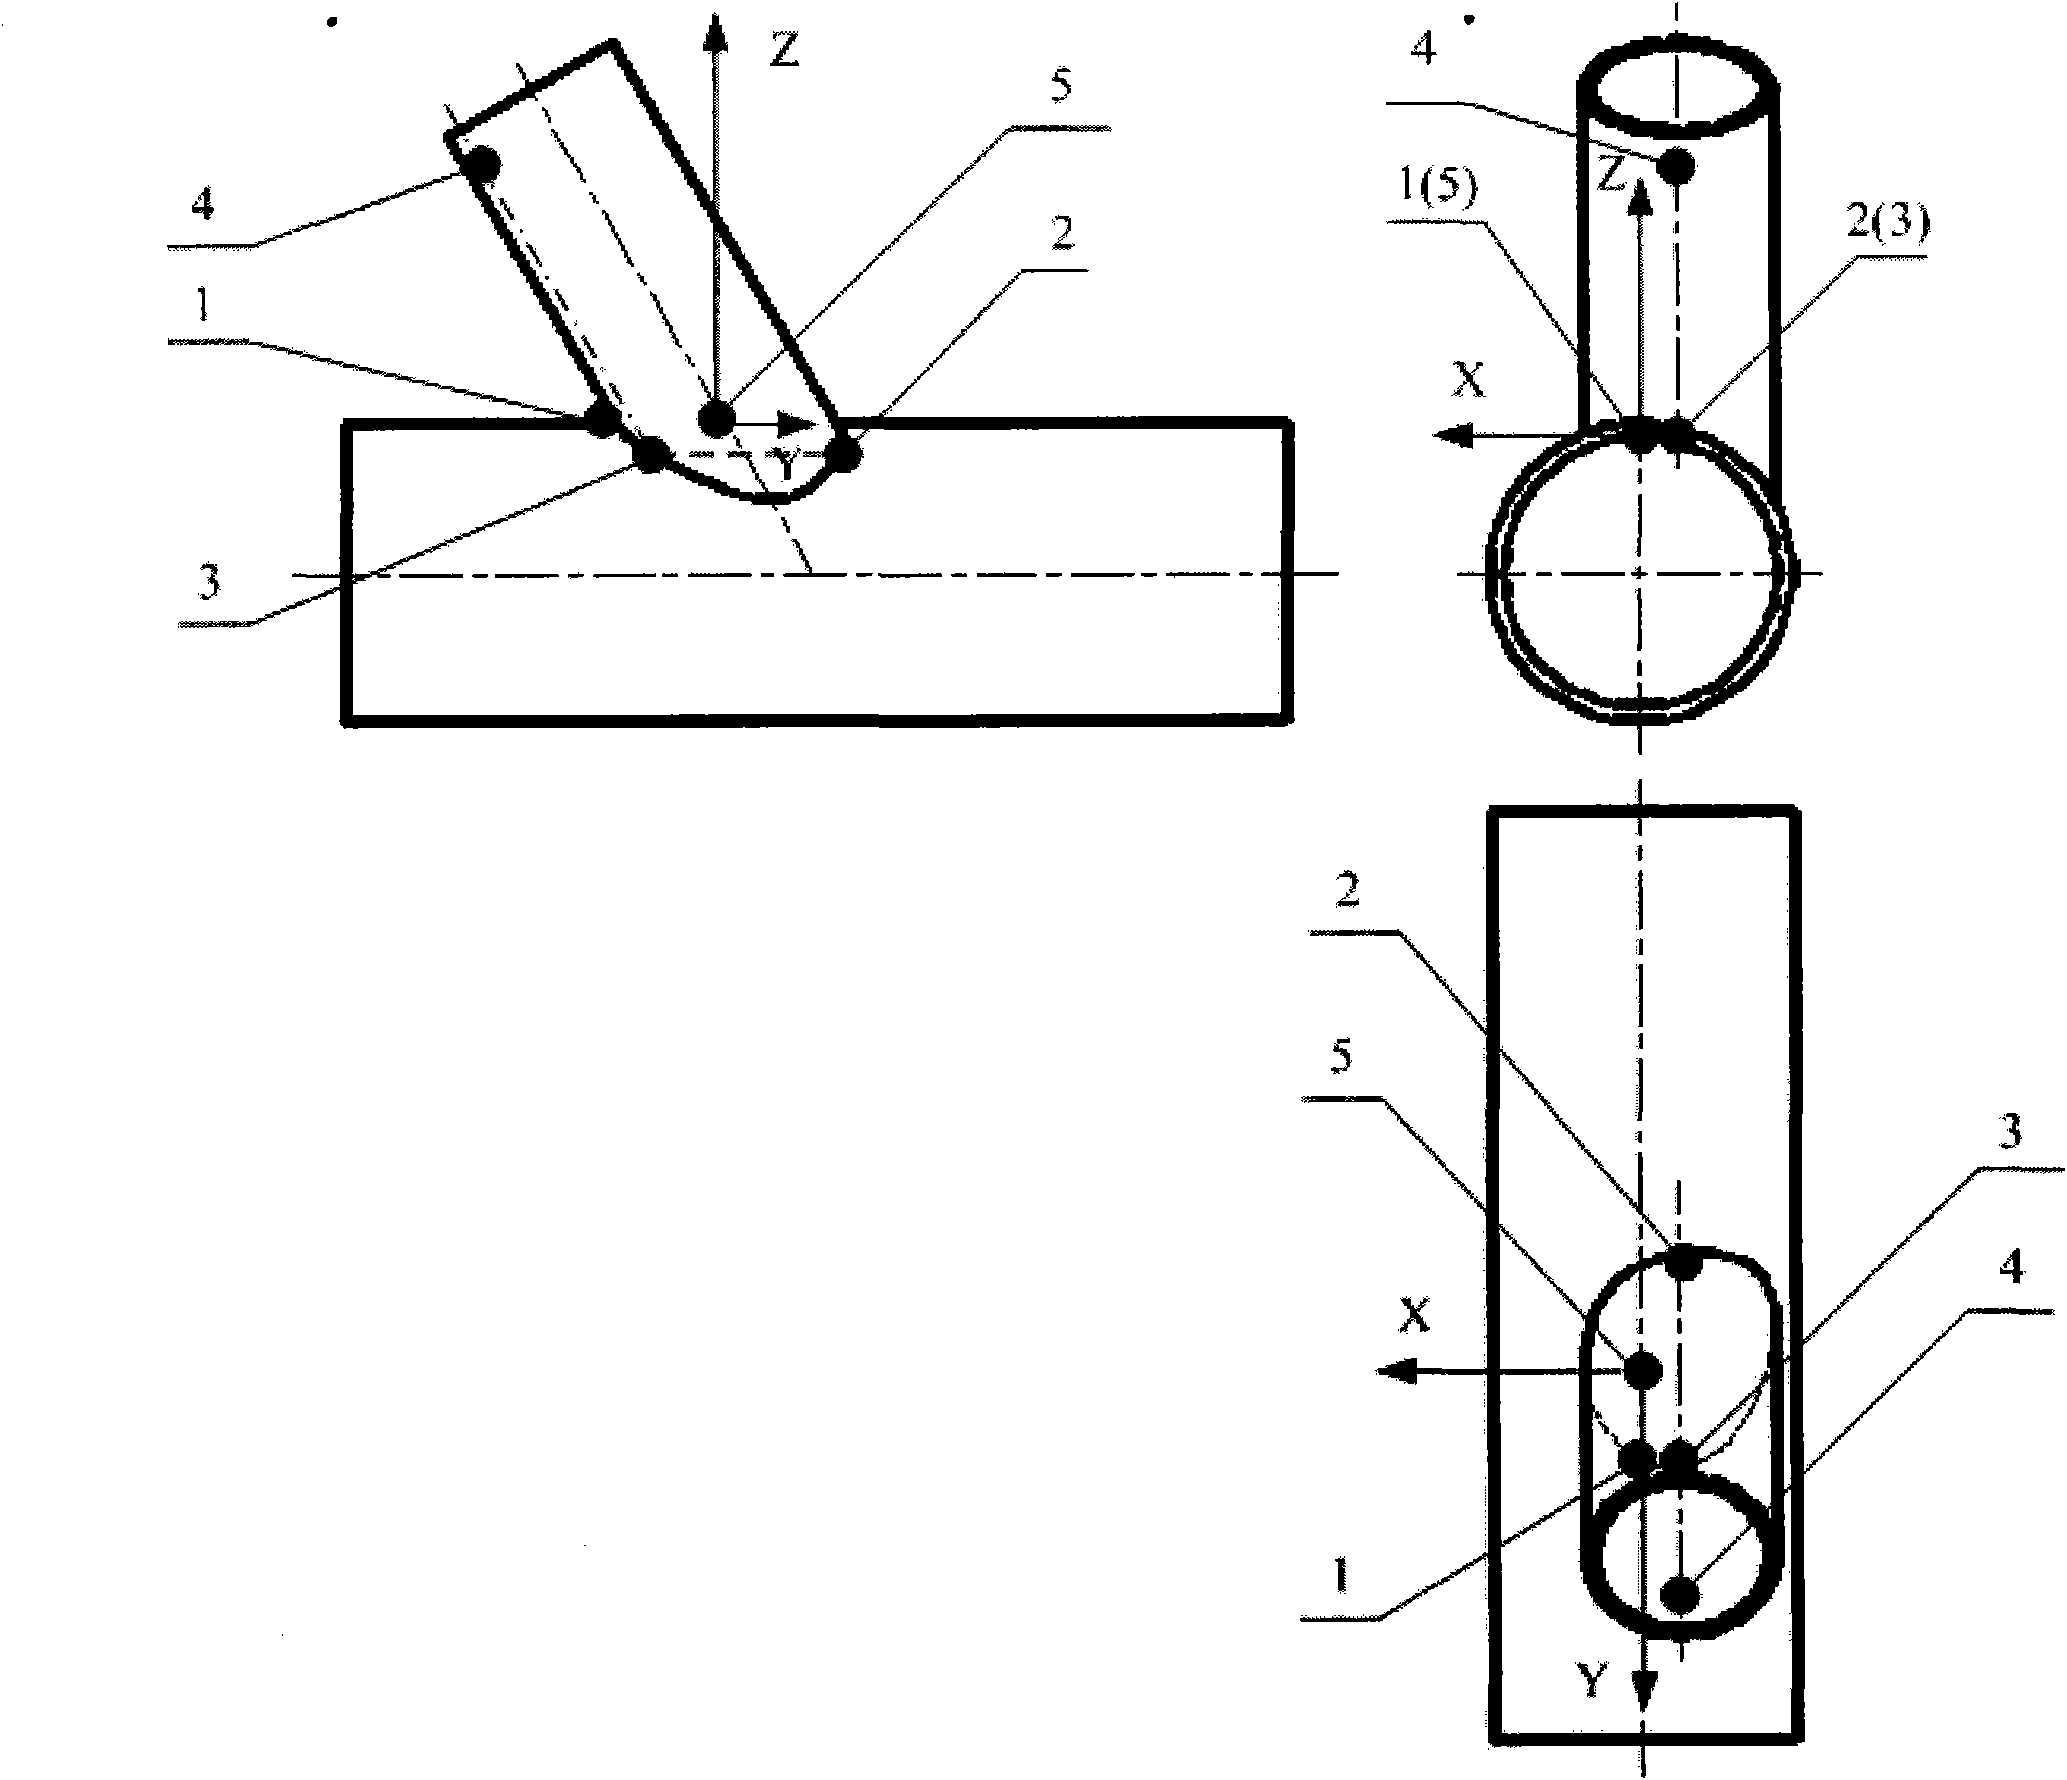 Universal arc welding robot teaching method regarding cylinder intersection welding seam